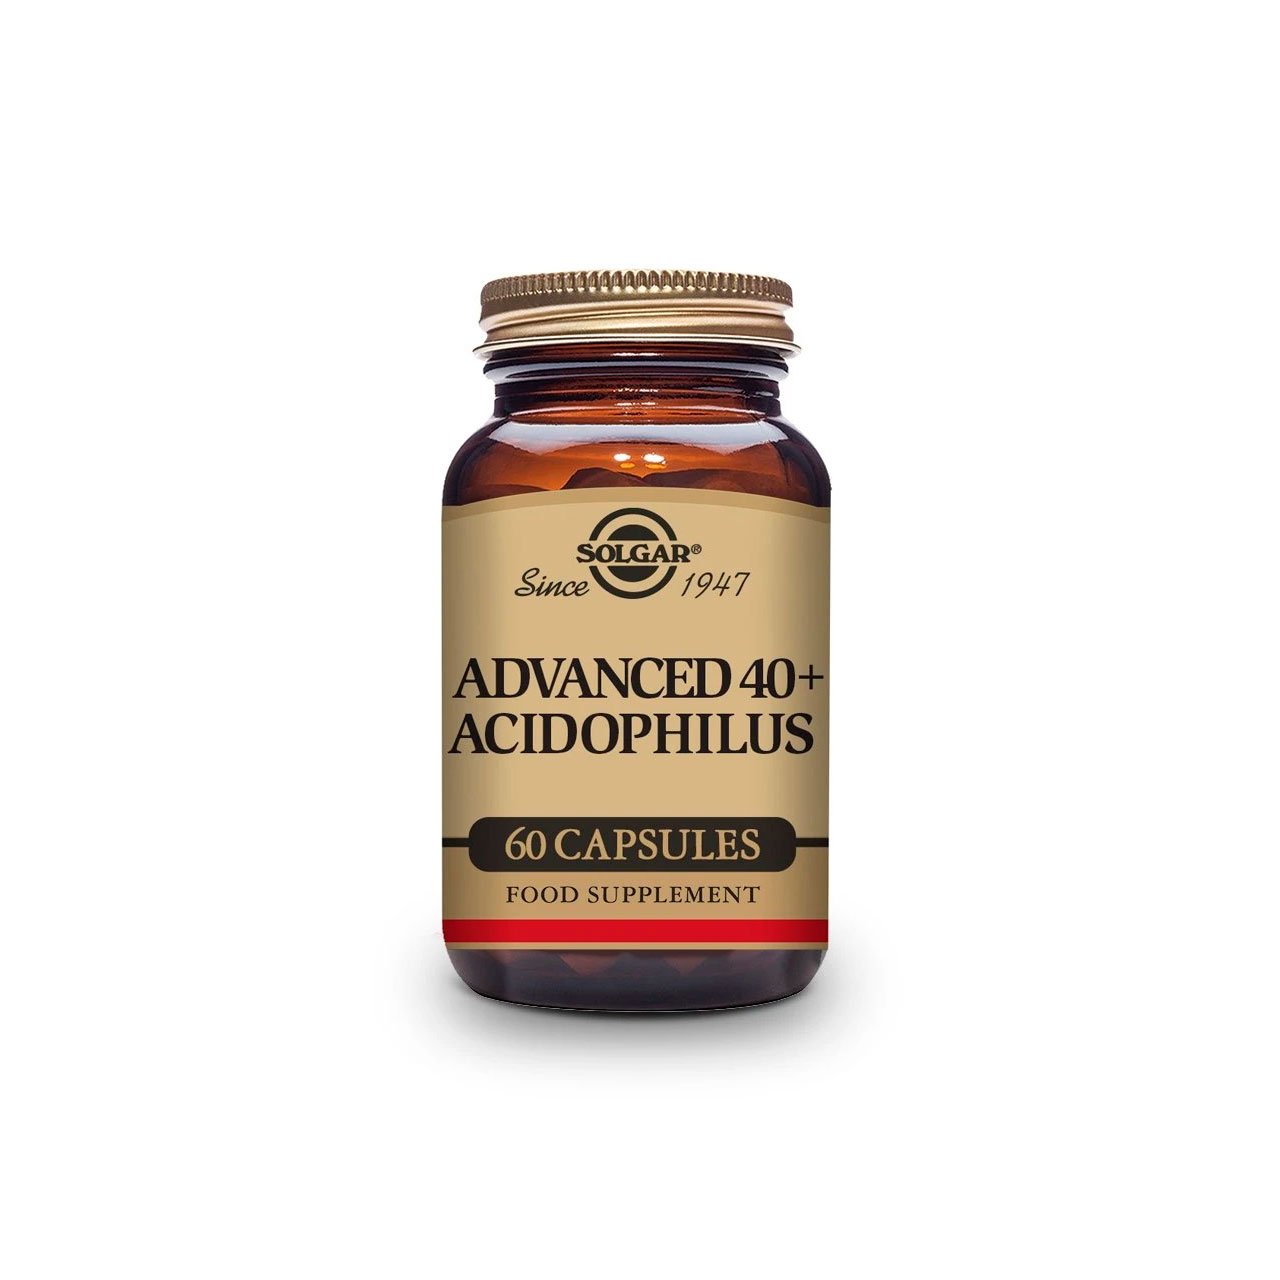 Advanced 40+ Acidophilus X 60 cápsulas - Solgar